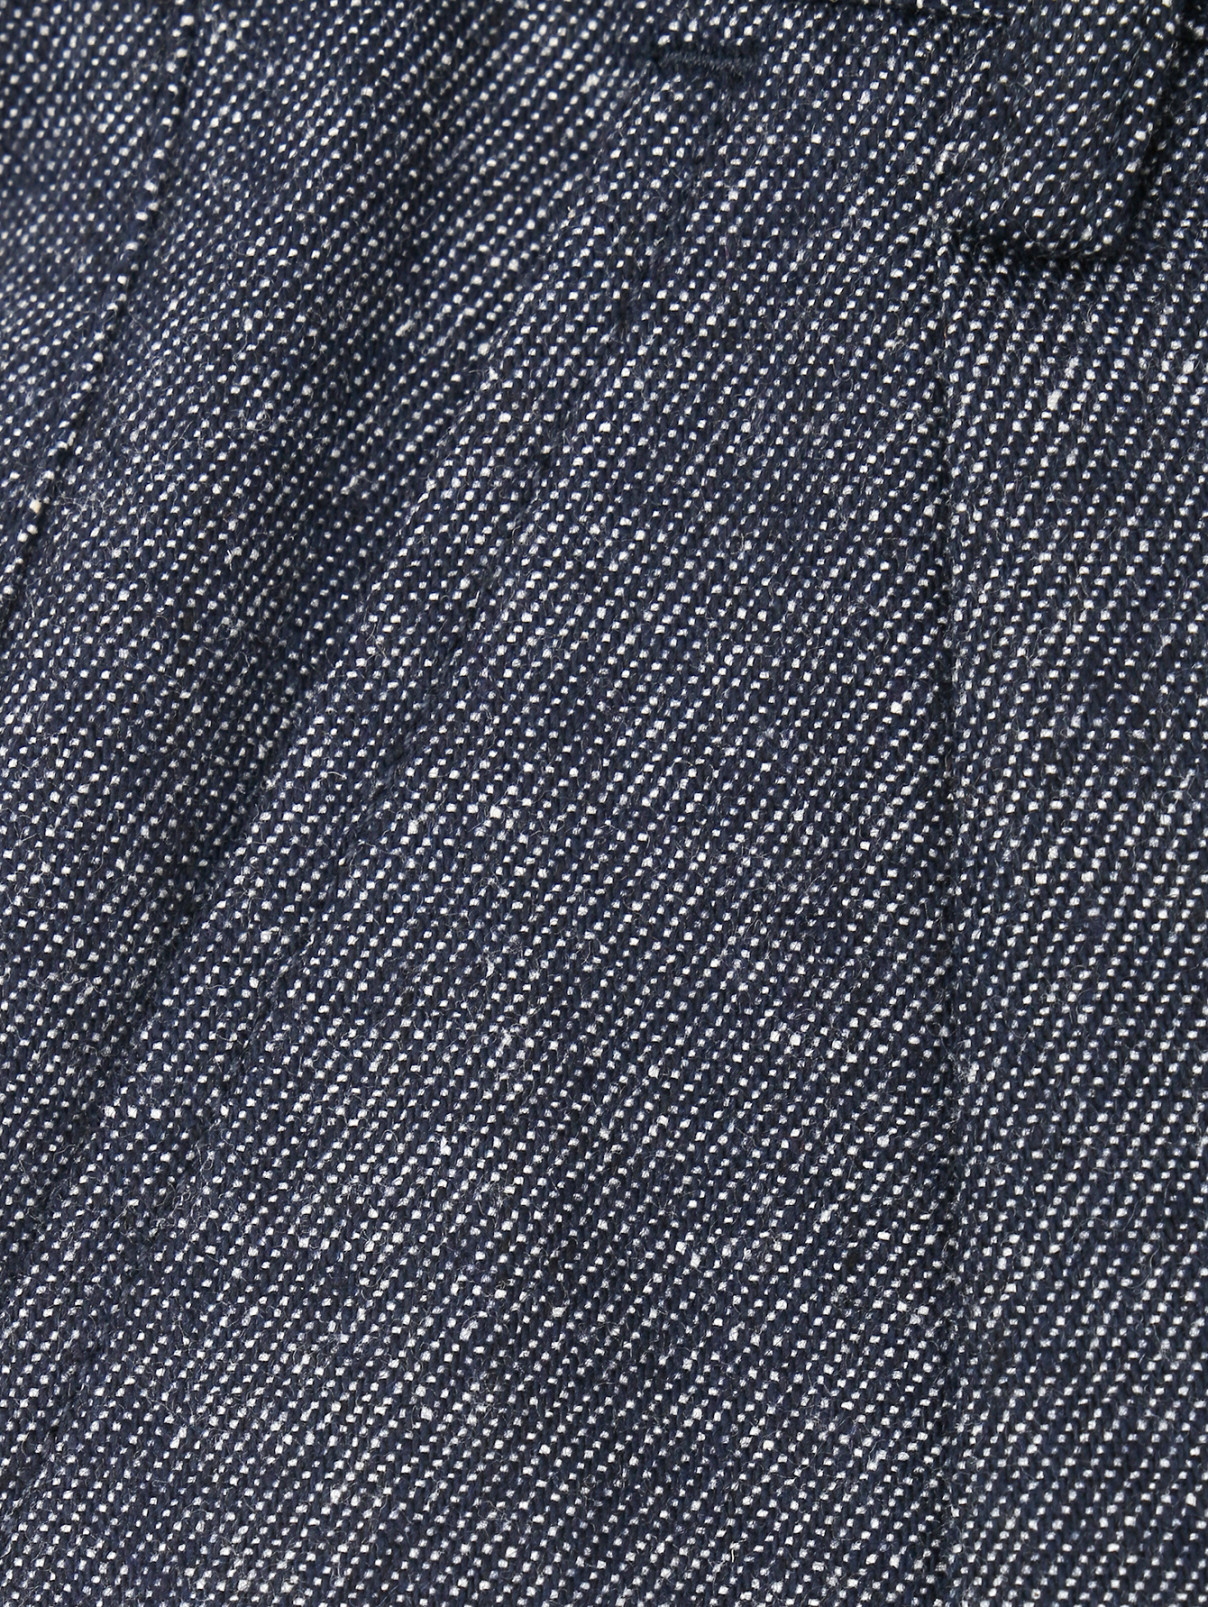 Широкие брюки со складками Aspesi  –  Деталь1  – Цвет:  Синий